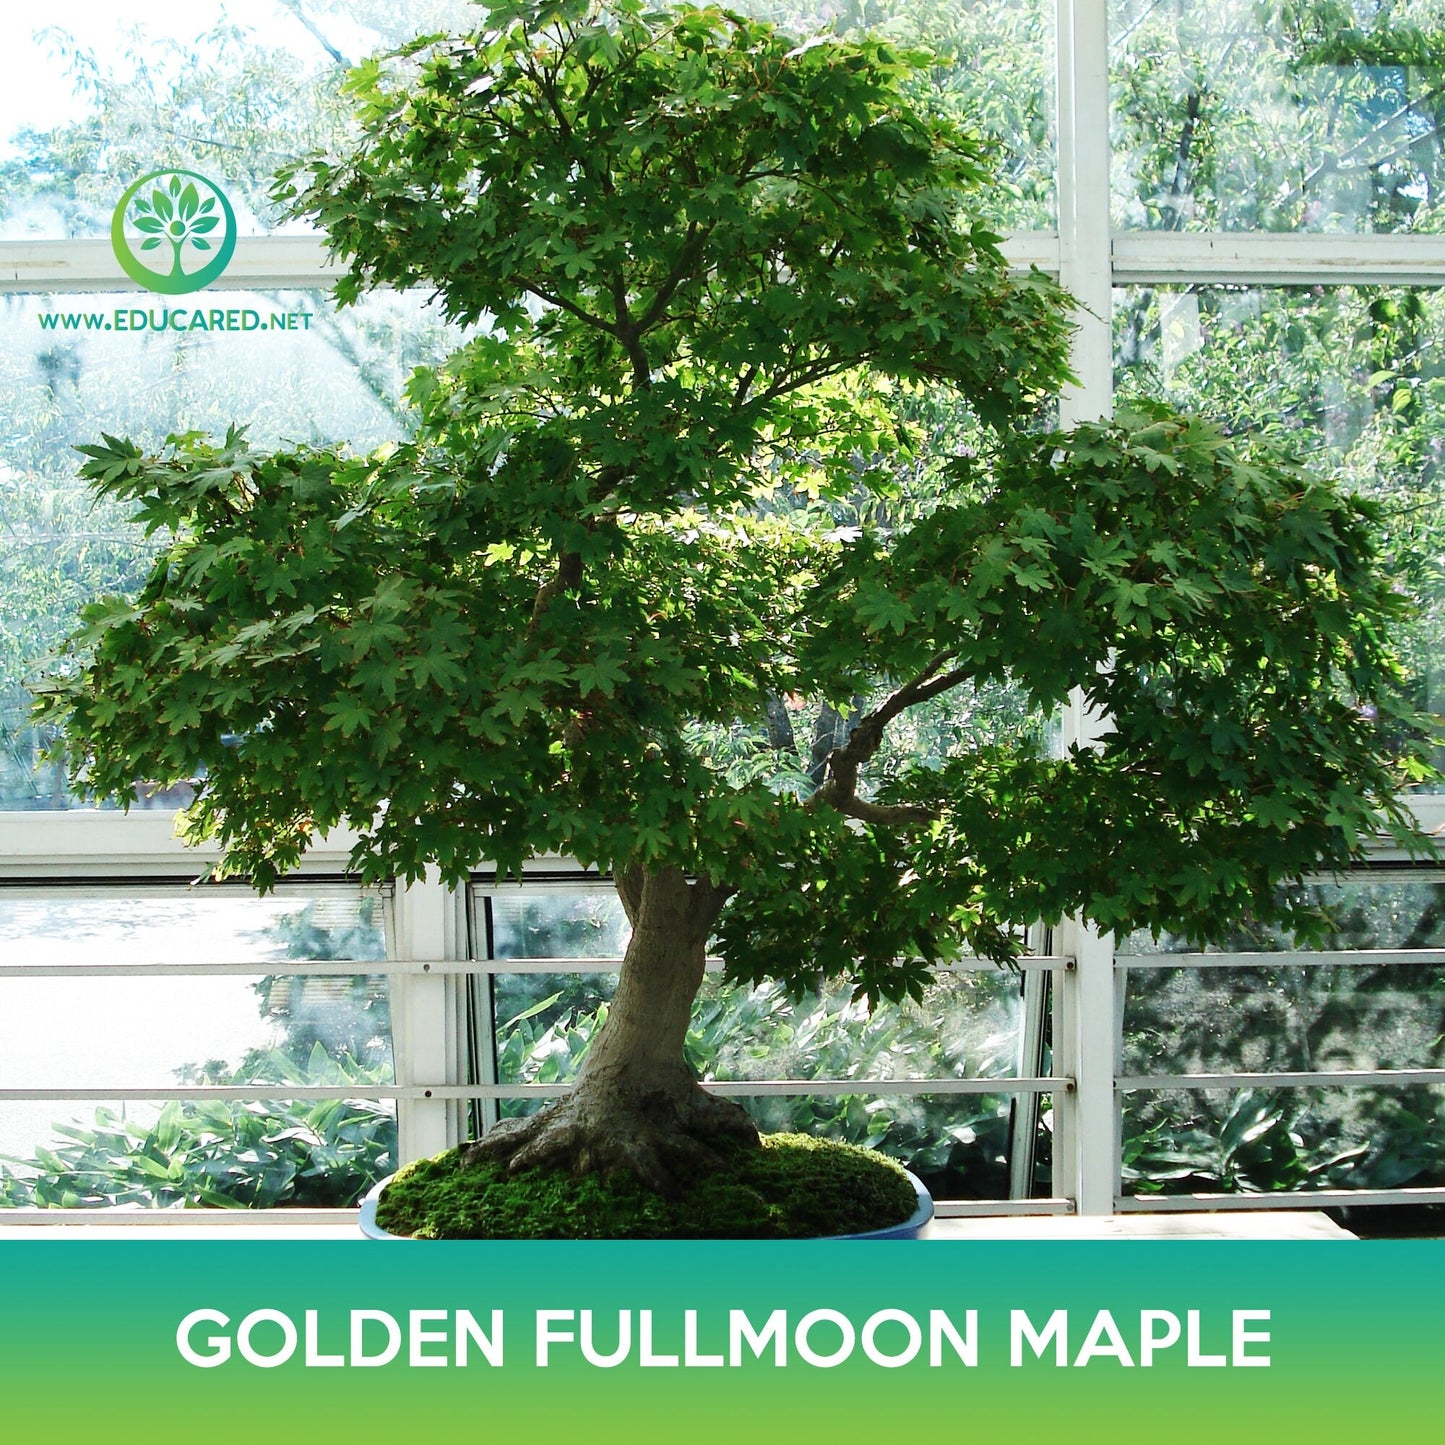 Golden Fullmoon Maple Seeds, Acer shirasawanum var. aureum